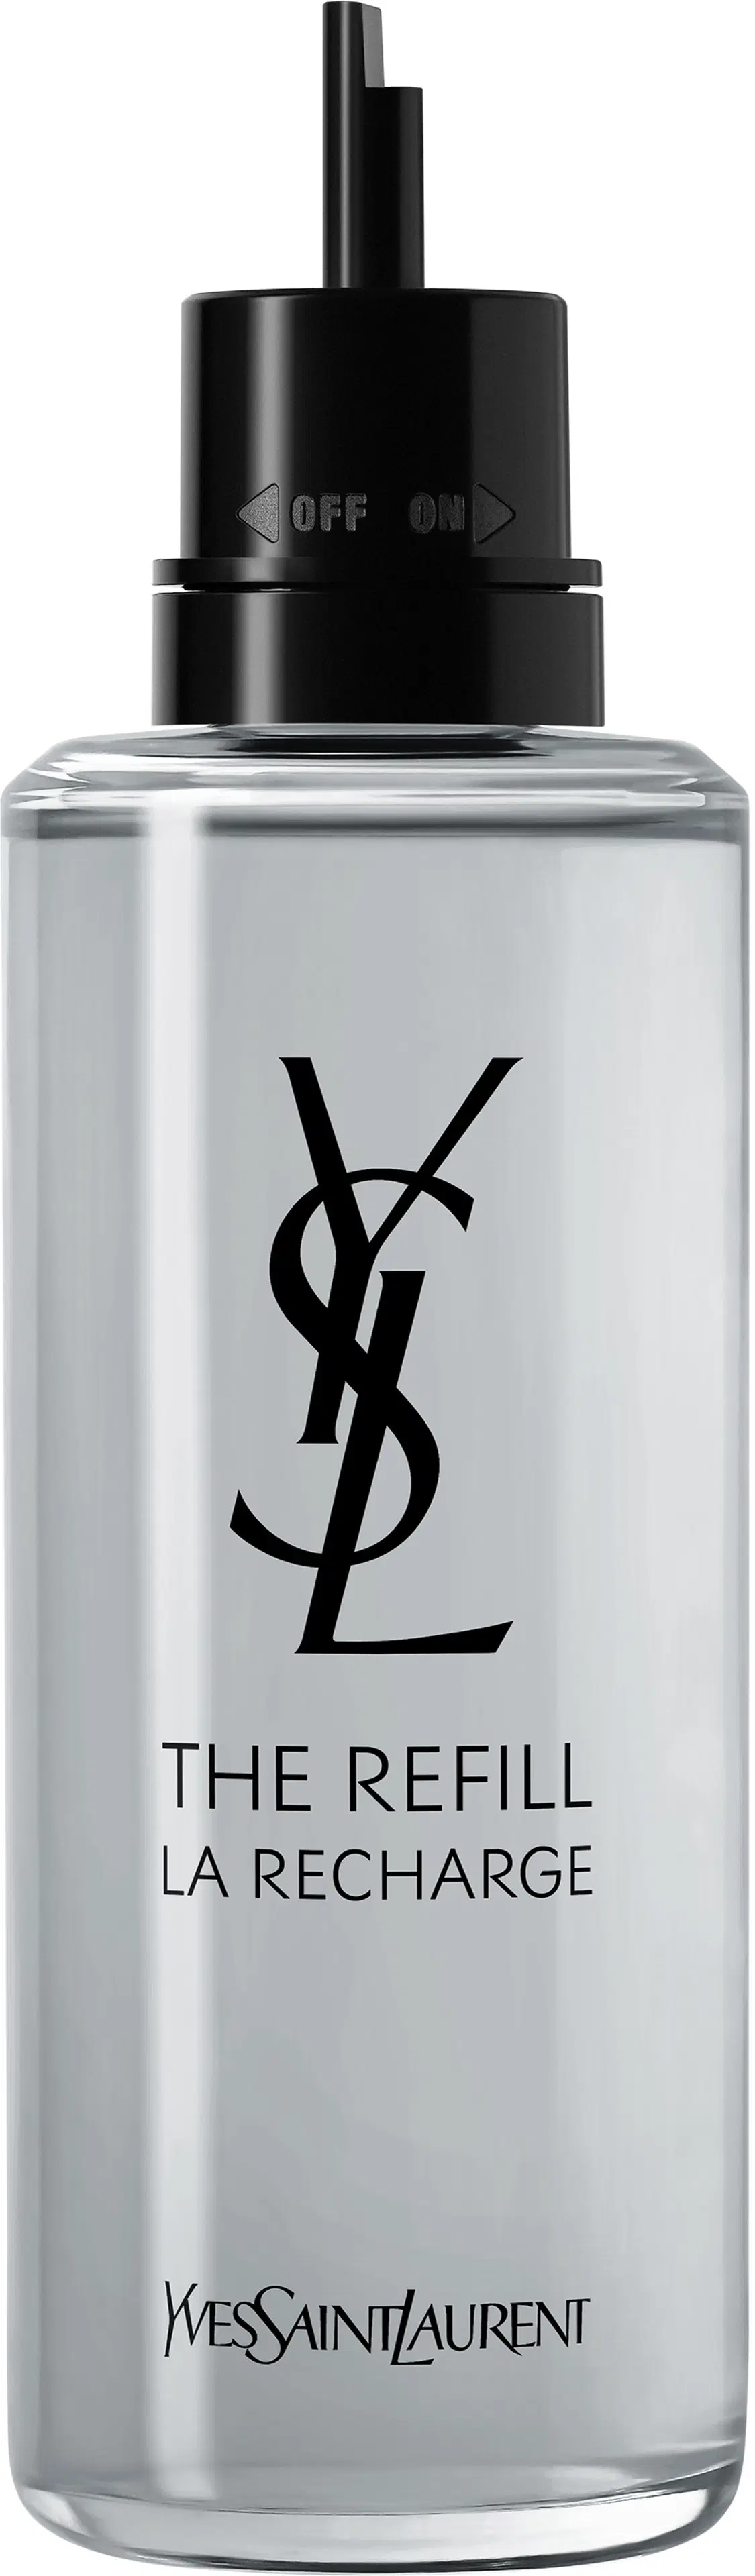 Yves Saint Laurent MYSLF EdP täyttöpakkaus 150 ml